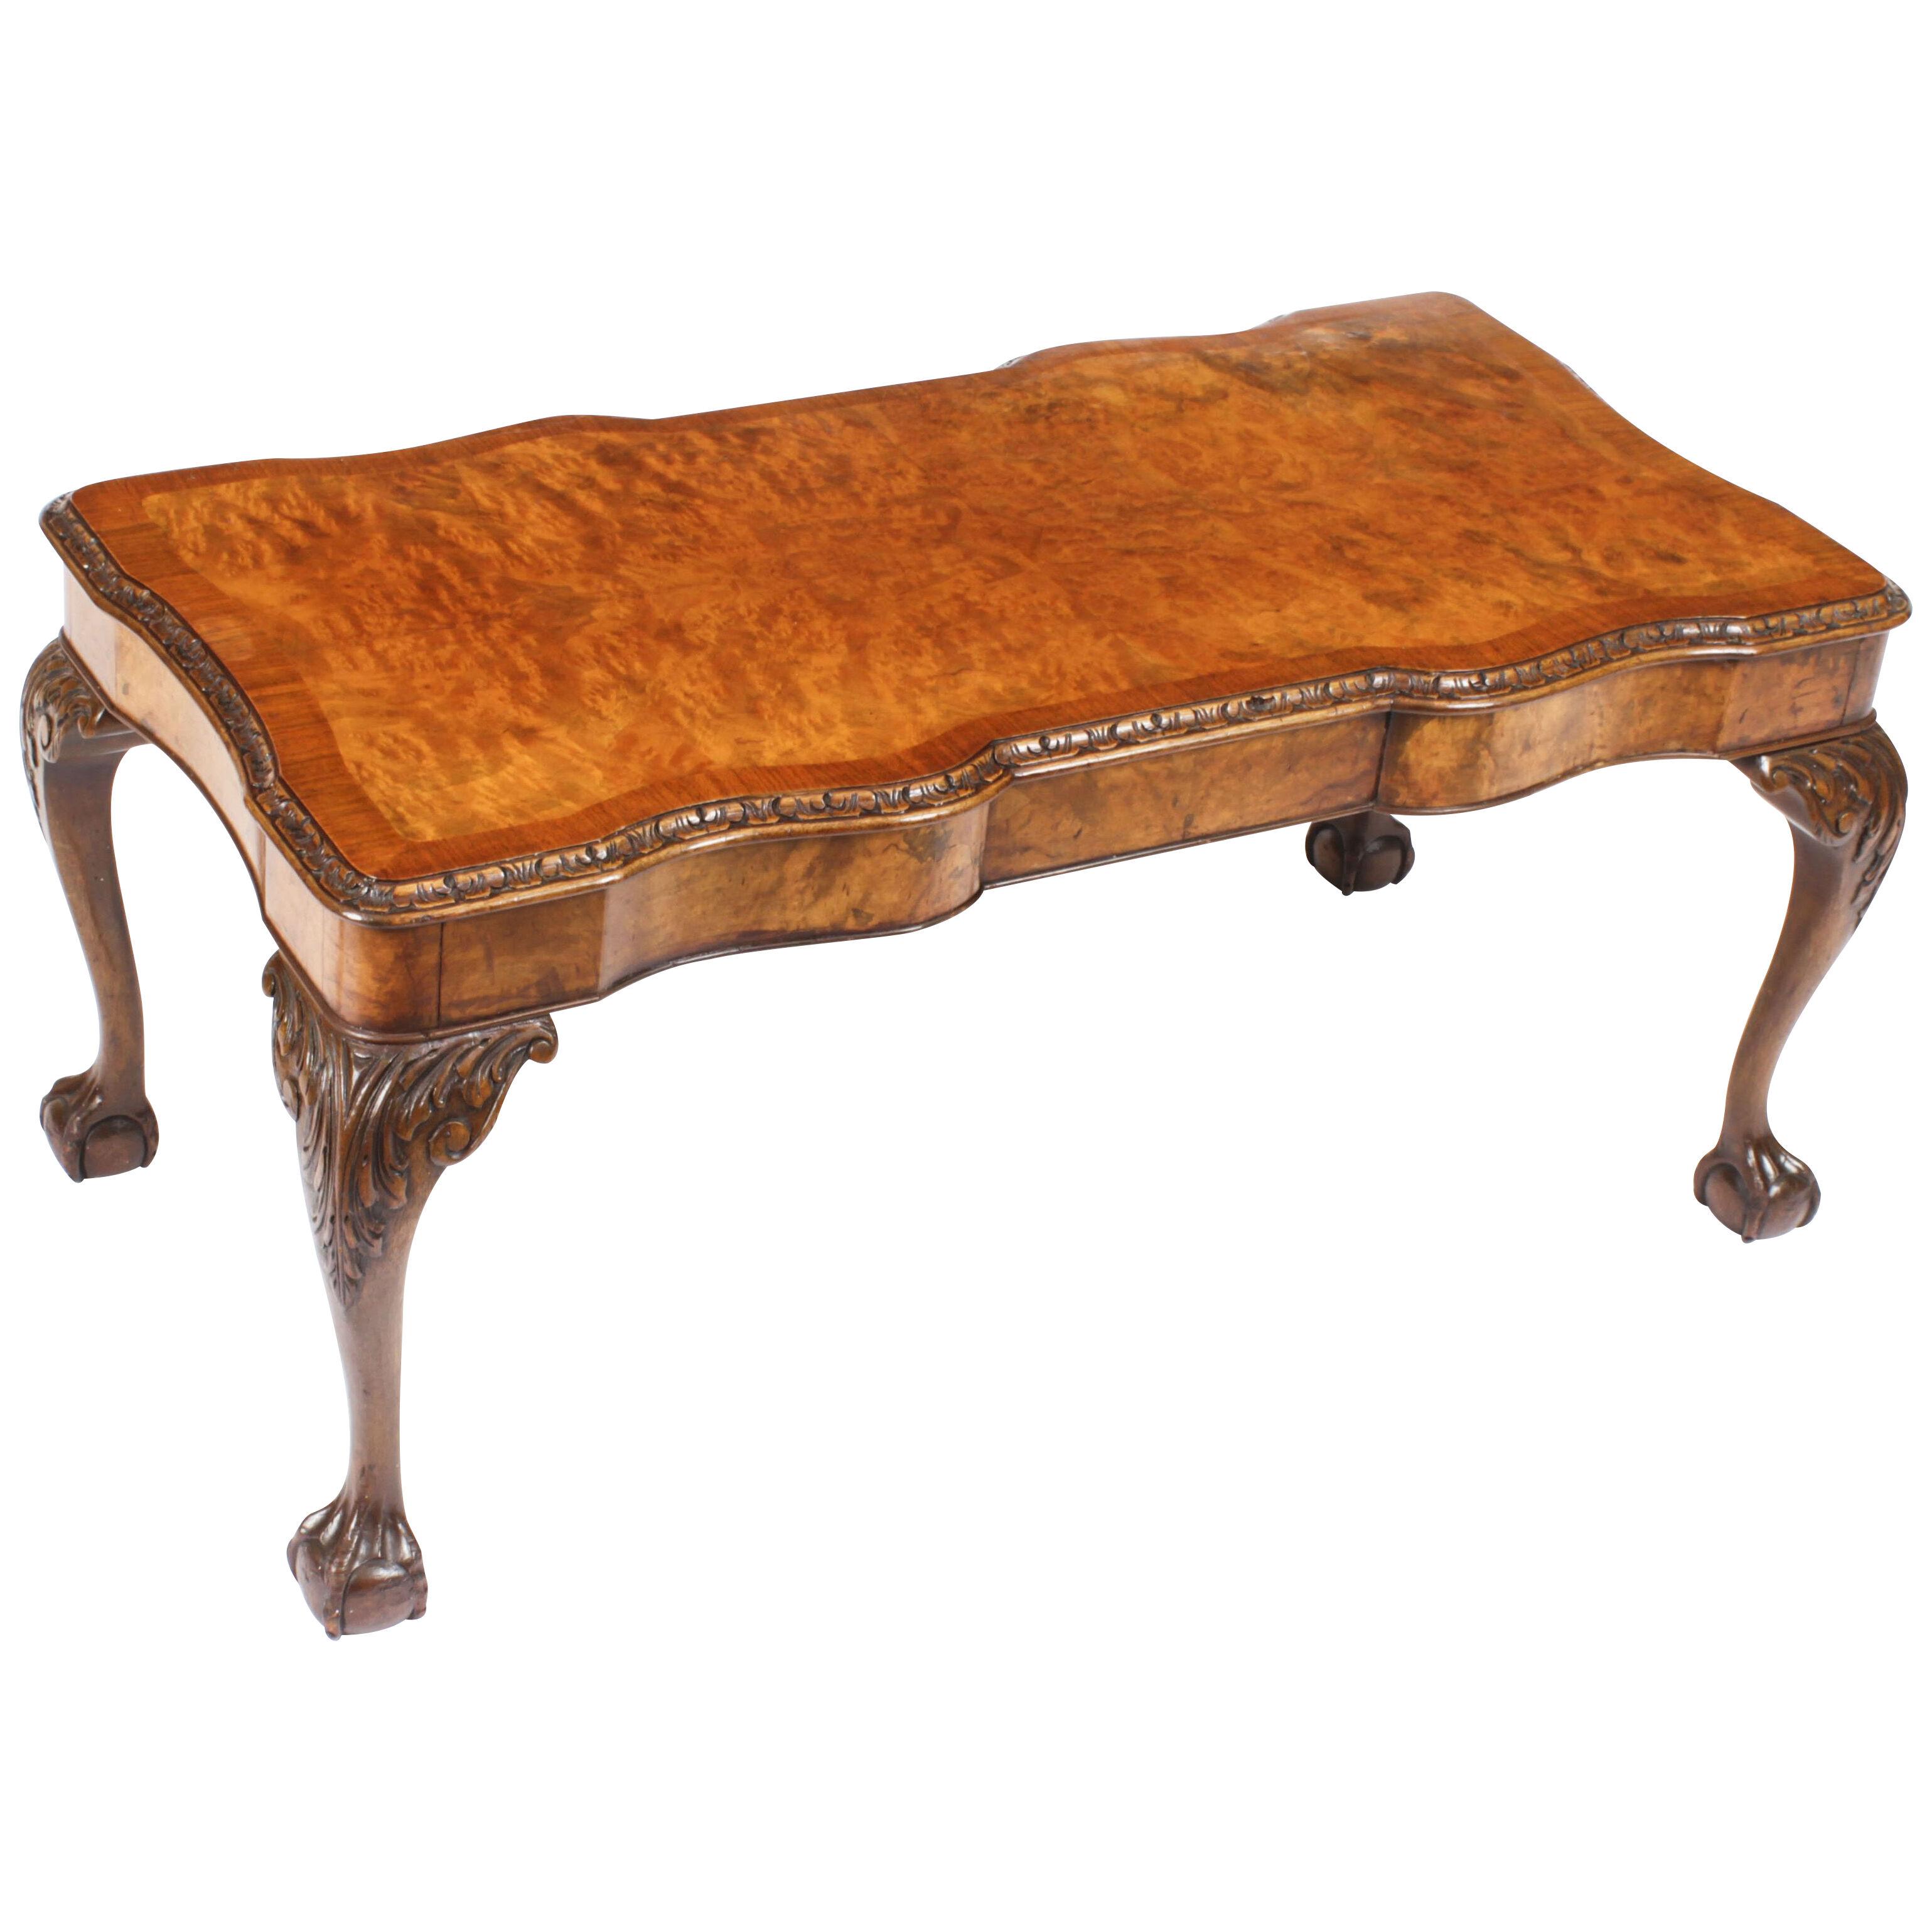 Antique Burr Walnut Queen Anne Revival Coffee Table c.1920